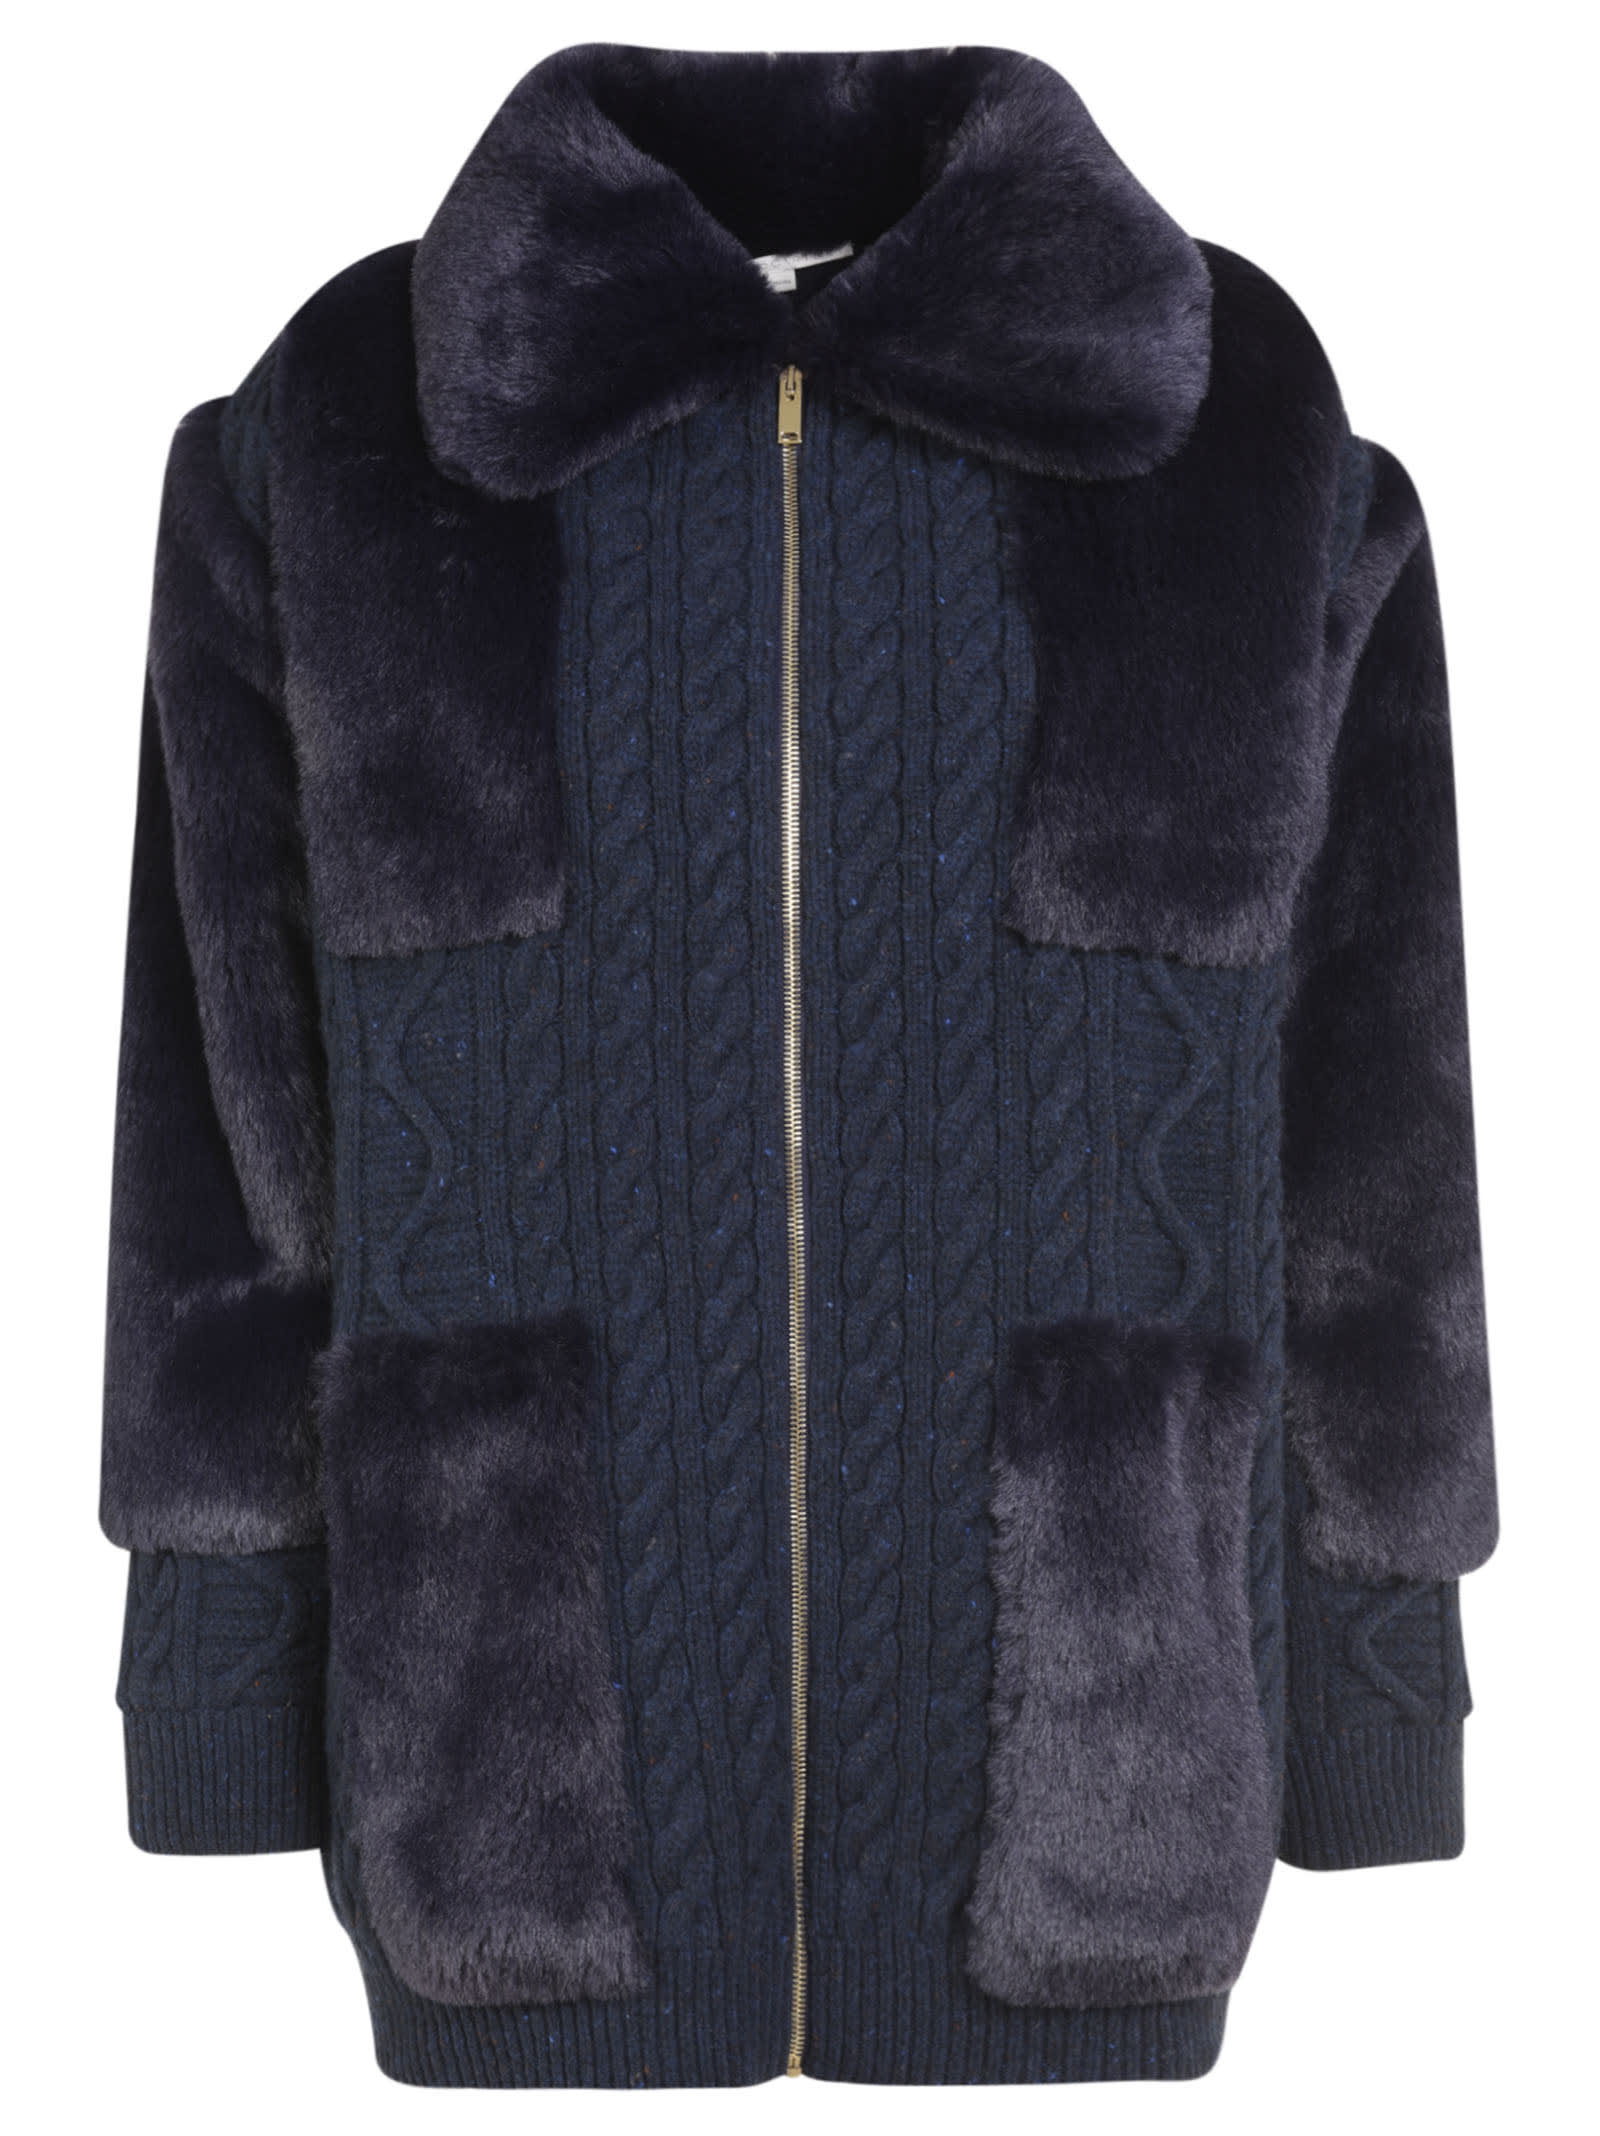 Stella McCartney Fur Zipped Jacket